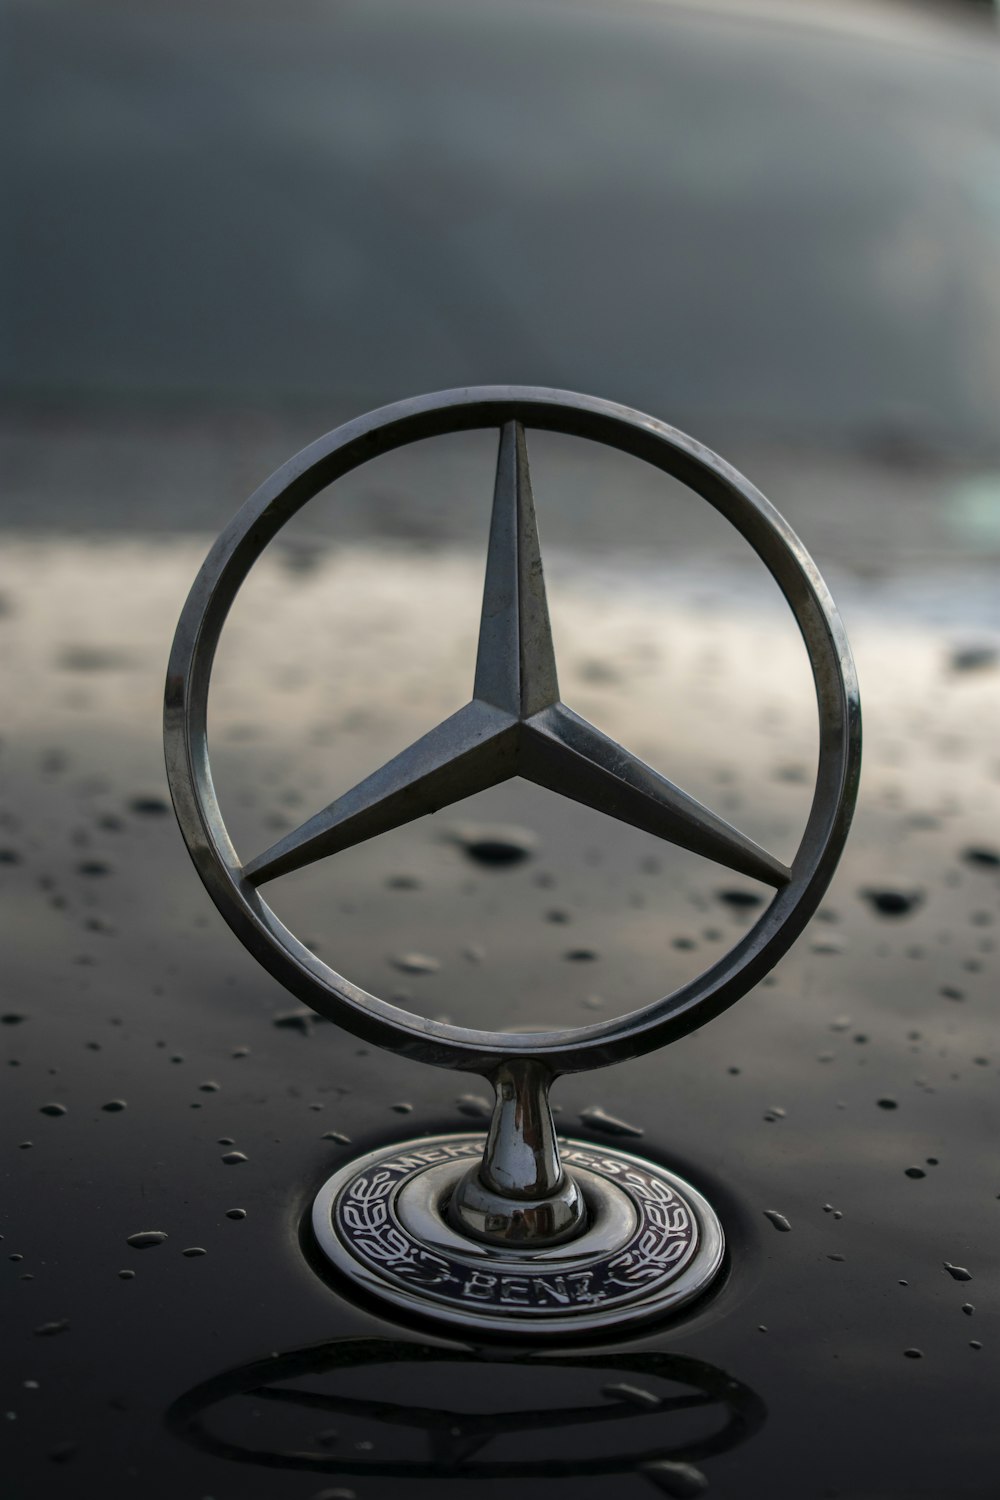 Emblem of a Mercedes Benz car · Free Stock Photo